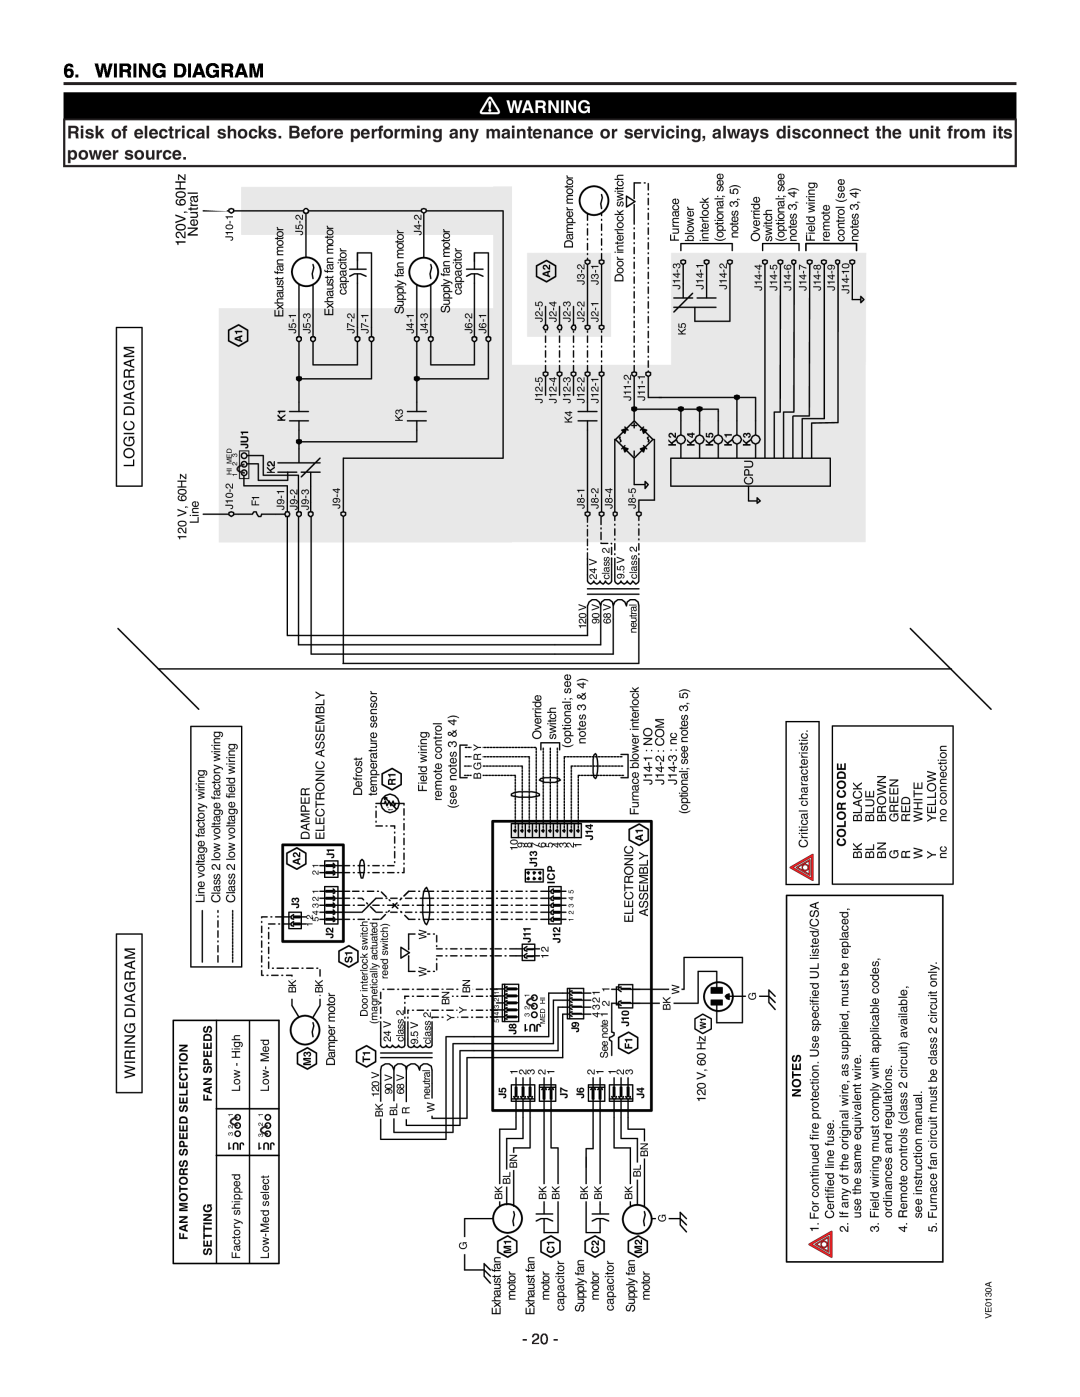 Broan ERV90HCT, HRV90HT installation instructions 6WIRING, Before, performing, maintenance, always, Logic Diagram 